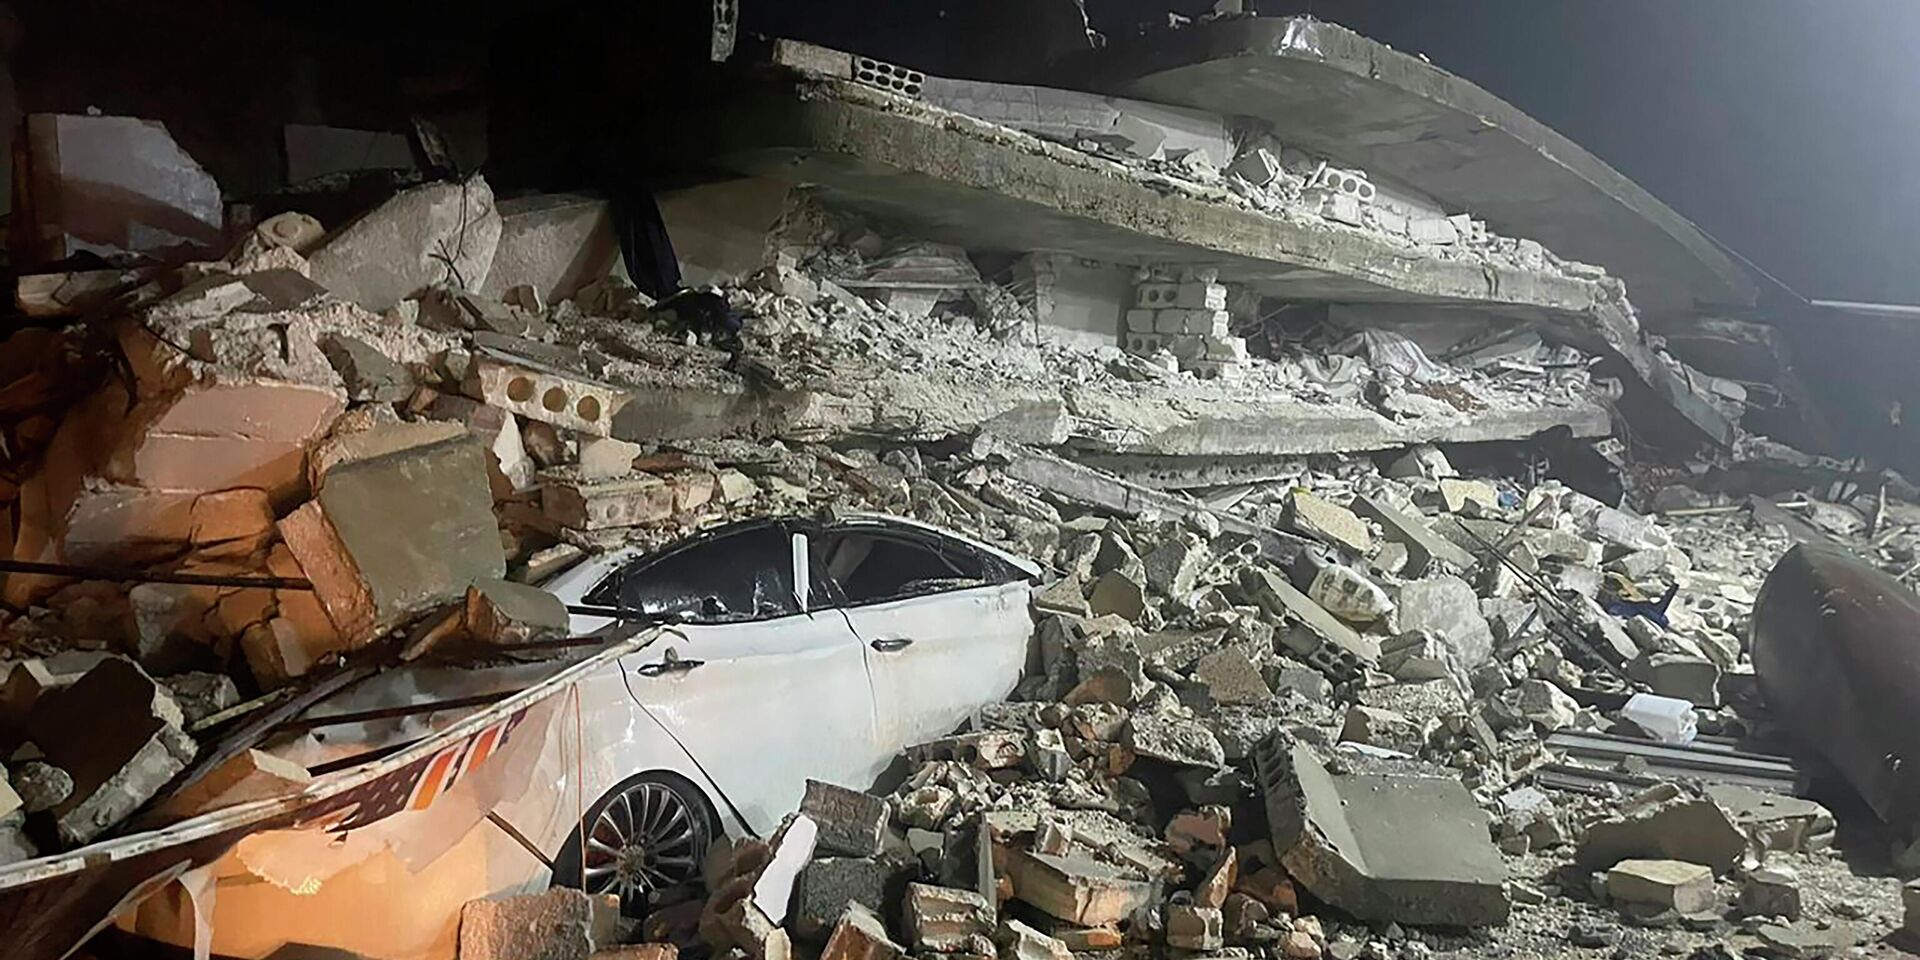 Последствия землетрясения в городе Азмарин, провинция Идлиб, Сирия. 6 февраля 2023 года - ИноСМИ, 1920, 20.02.2023